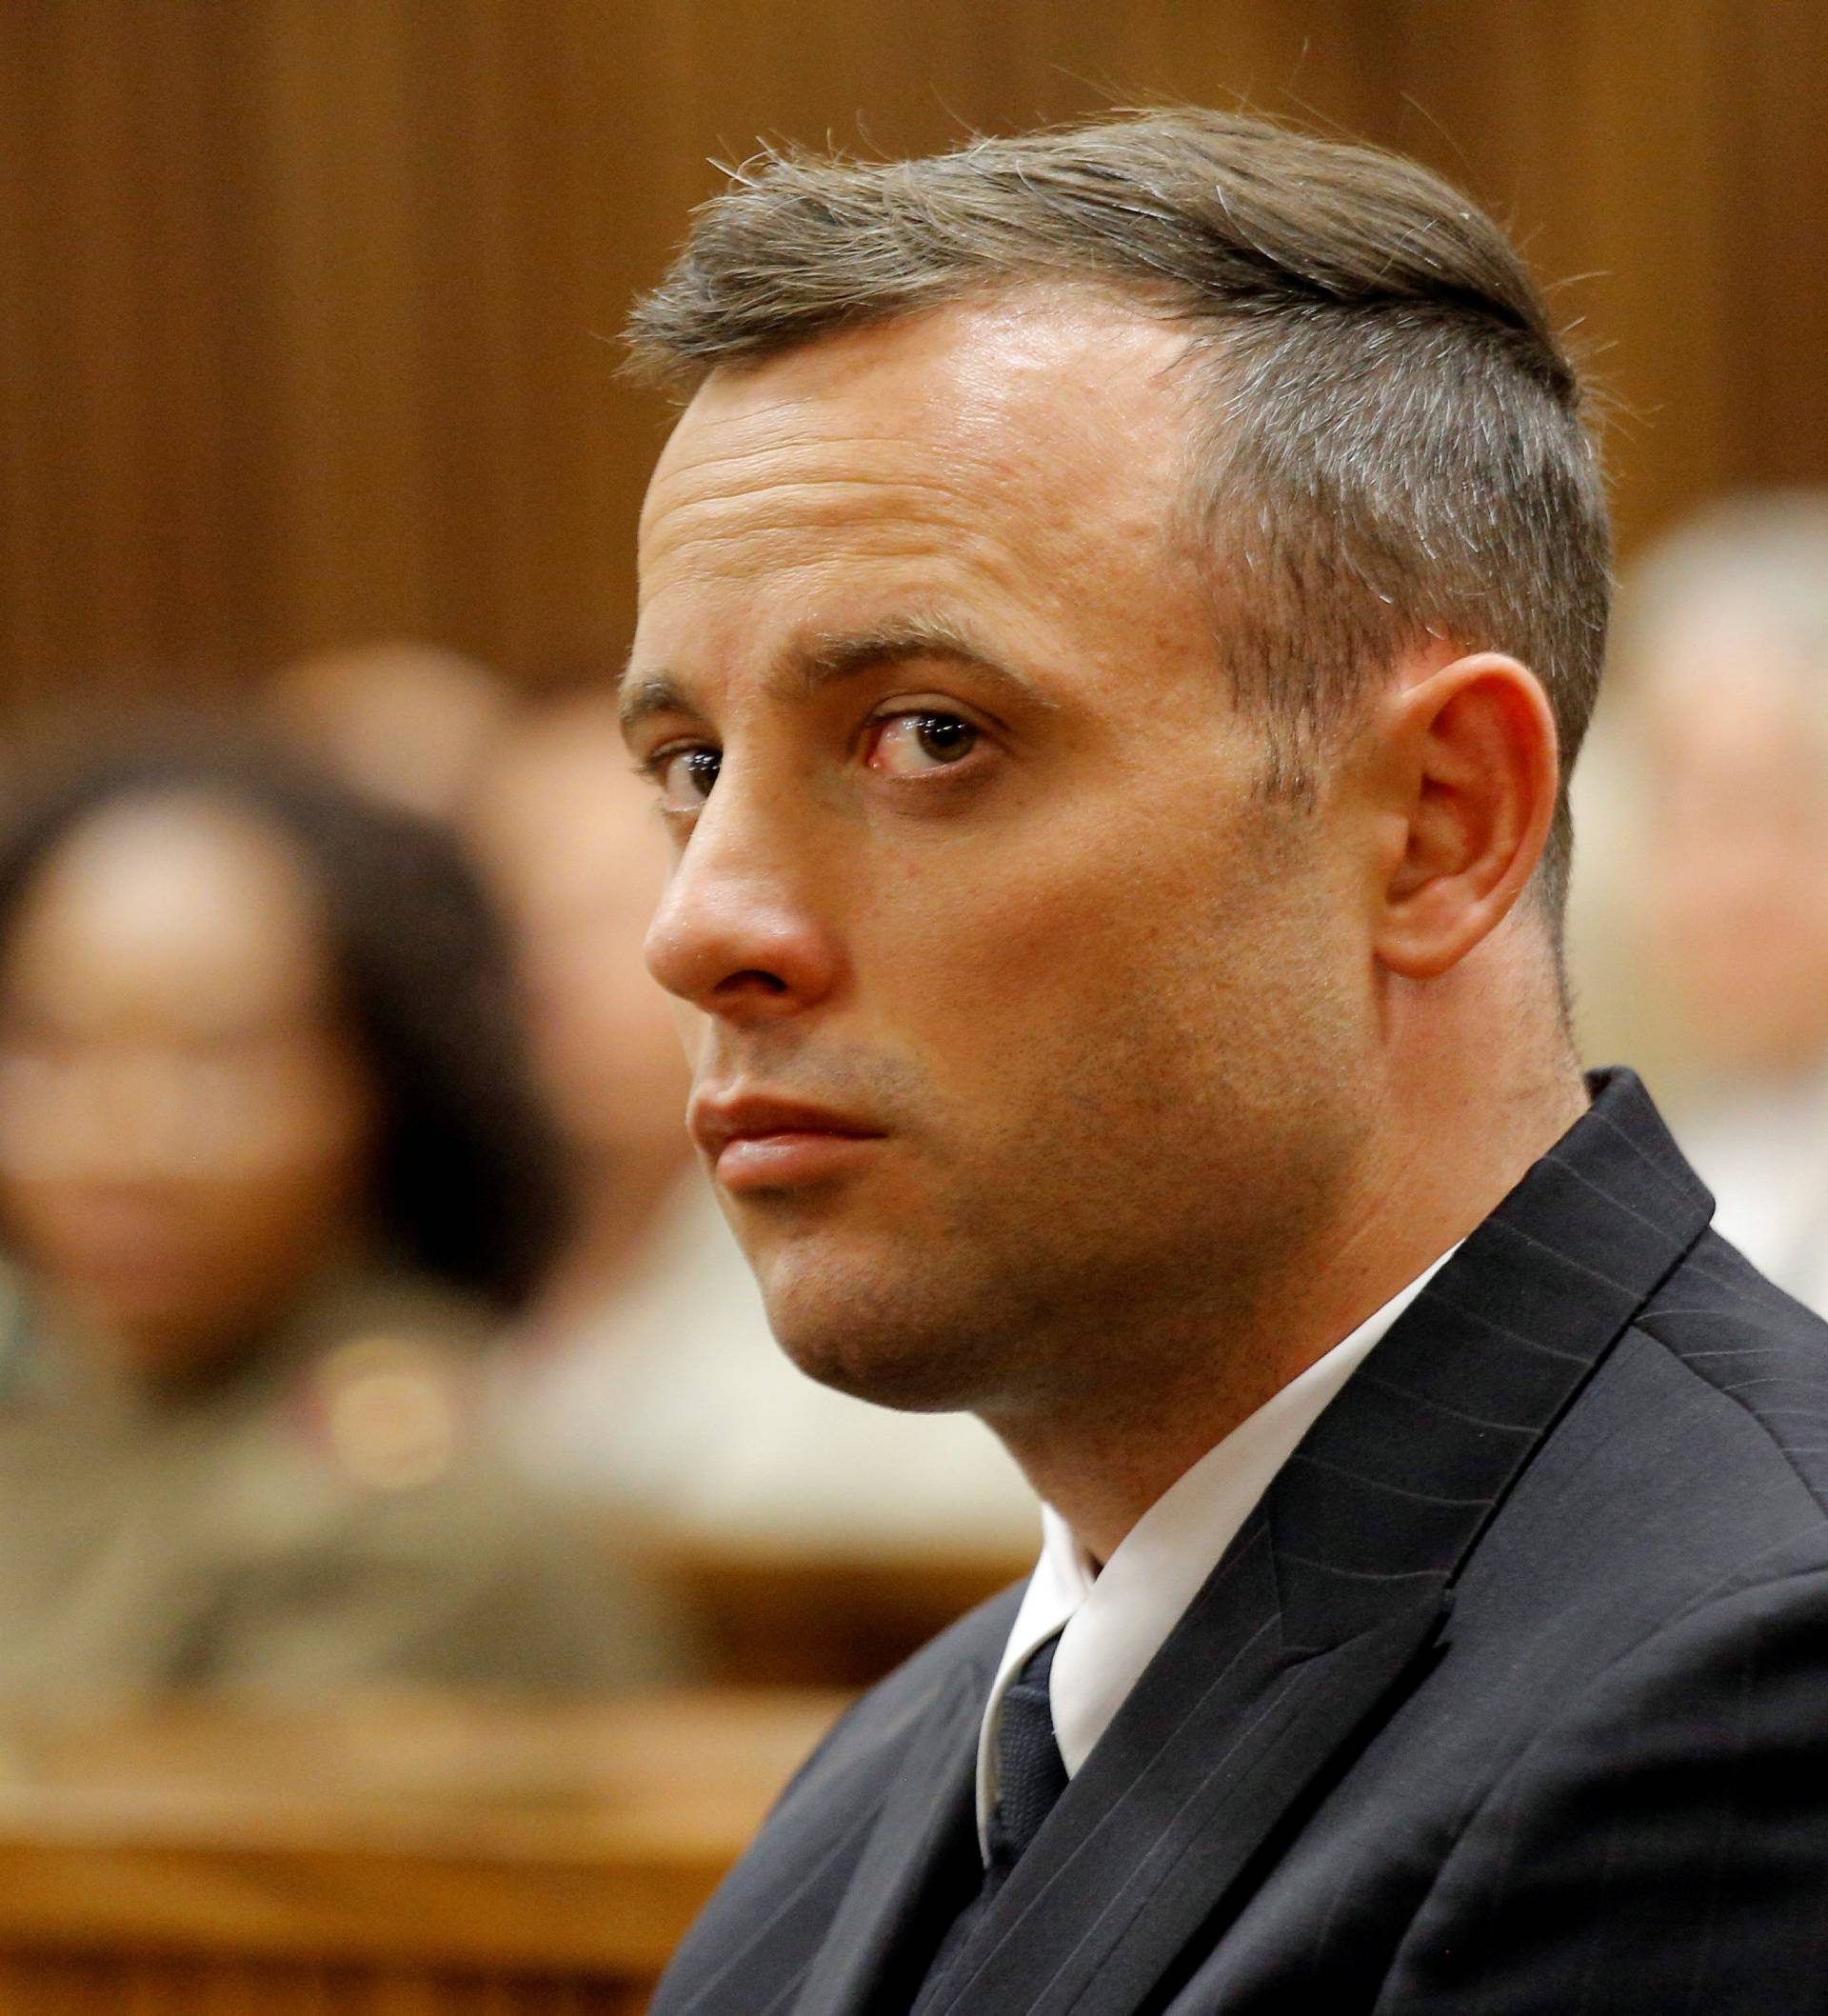 Former Paralympian Oscar Pistorius appears for sentencing for murder of Reeva Steenkamp at the Pretoria High Court